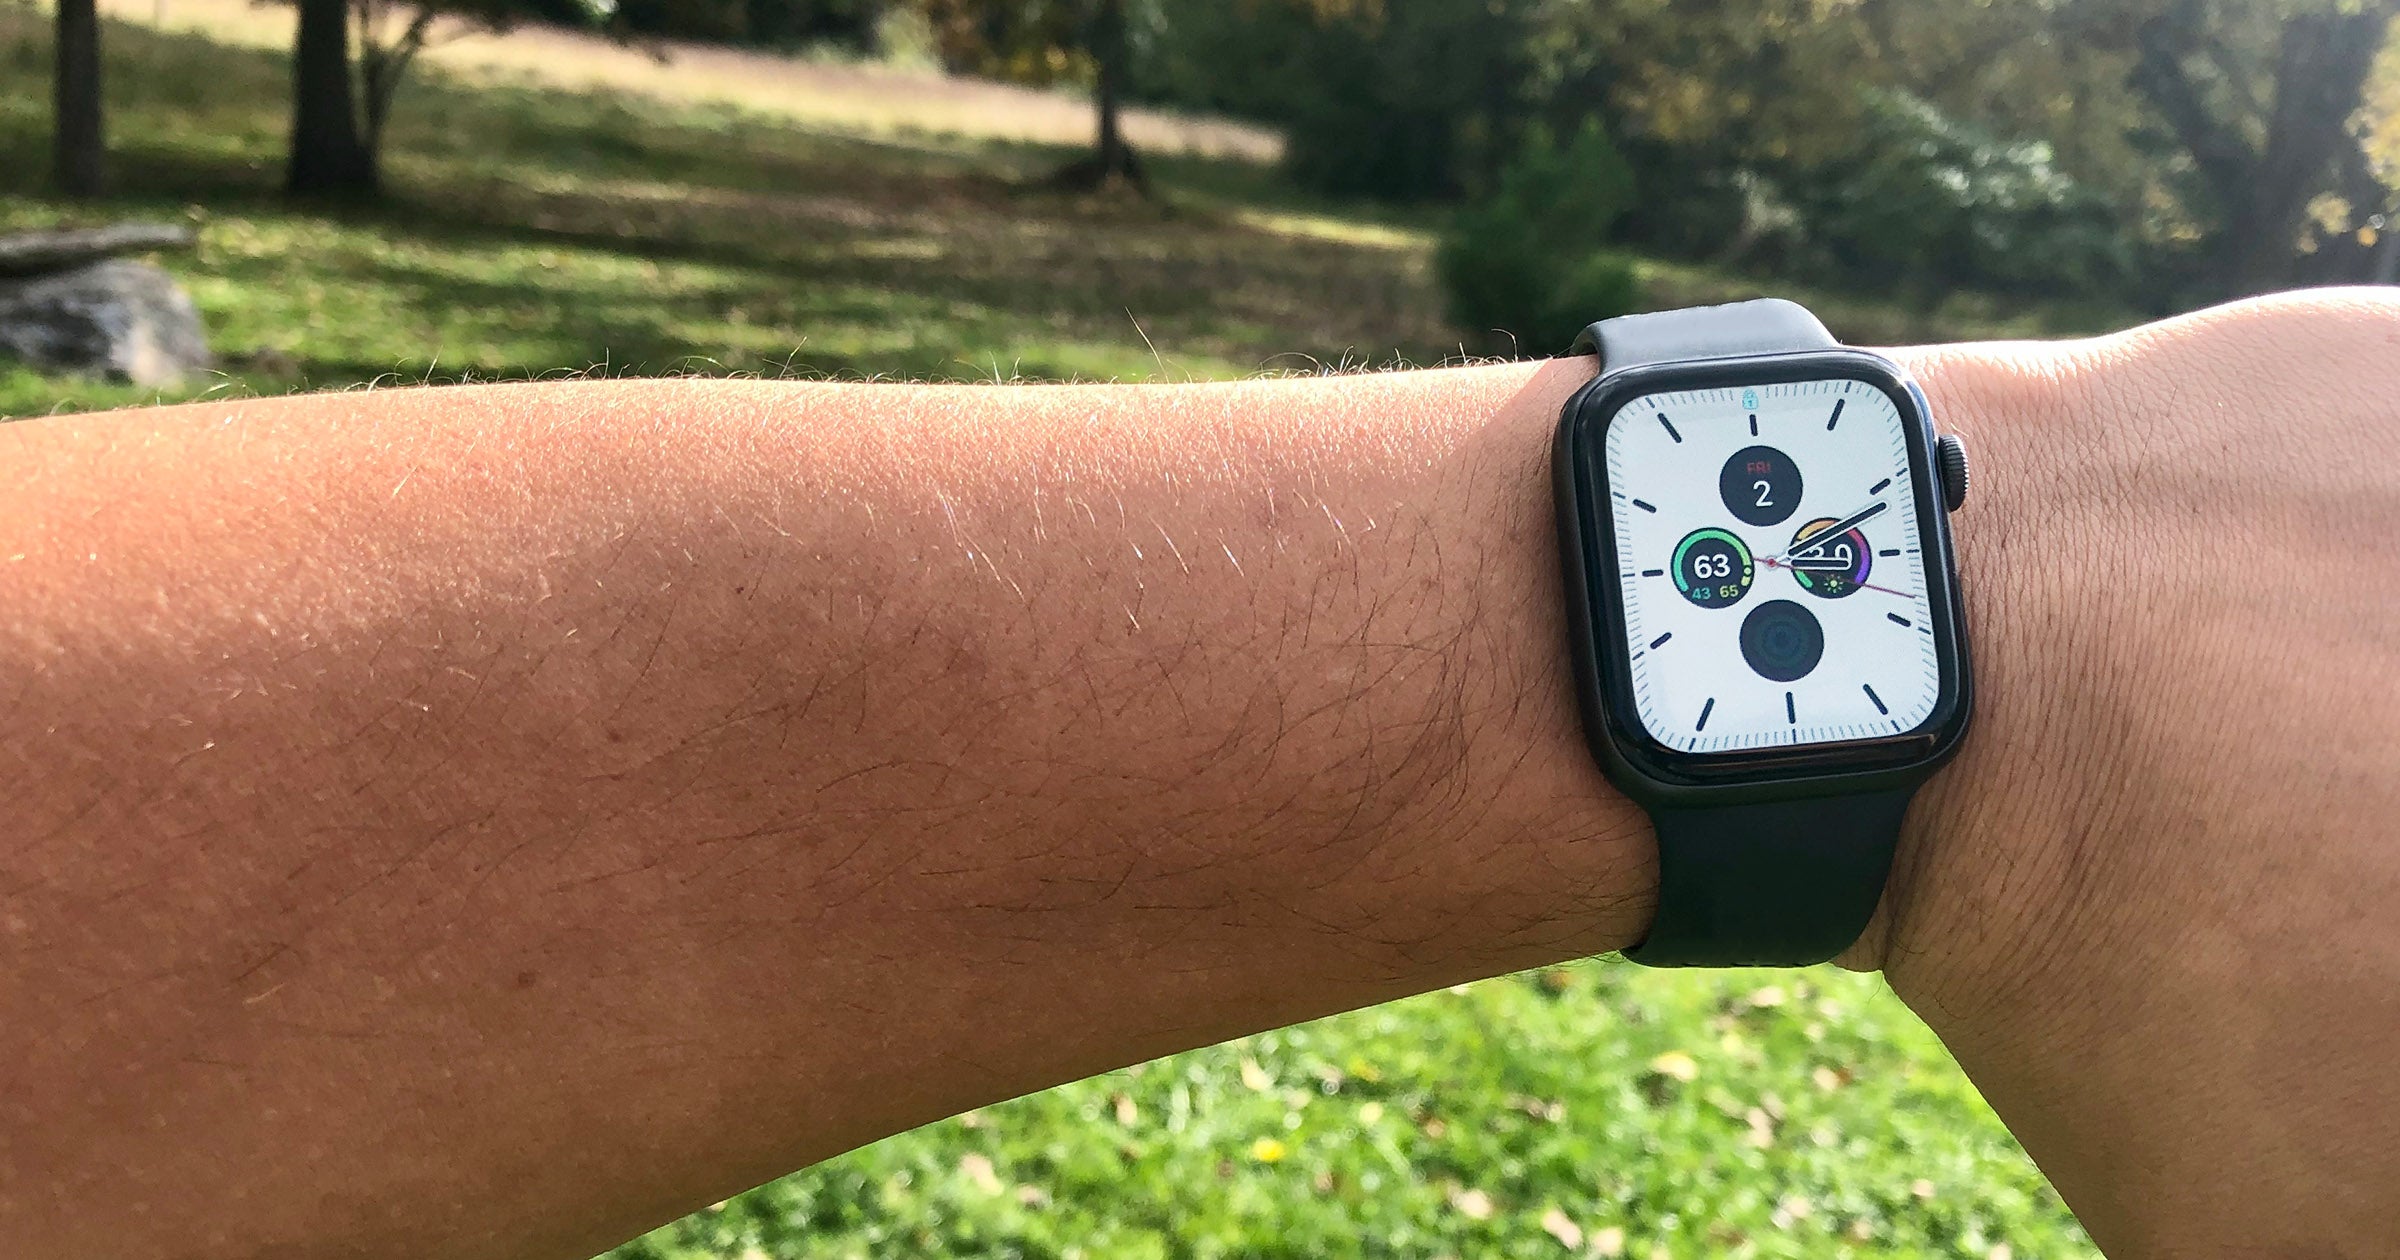 Apple Watch Series 6 Facebook Giveaway!